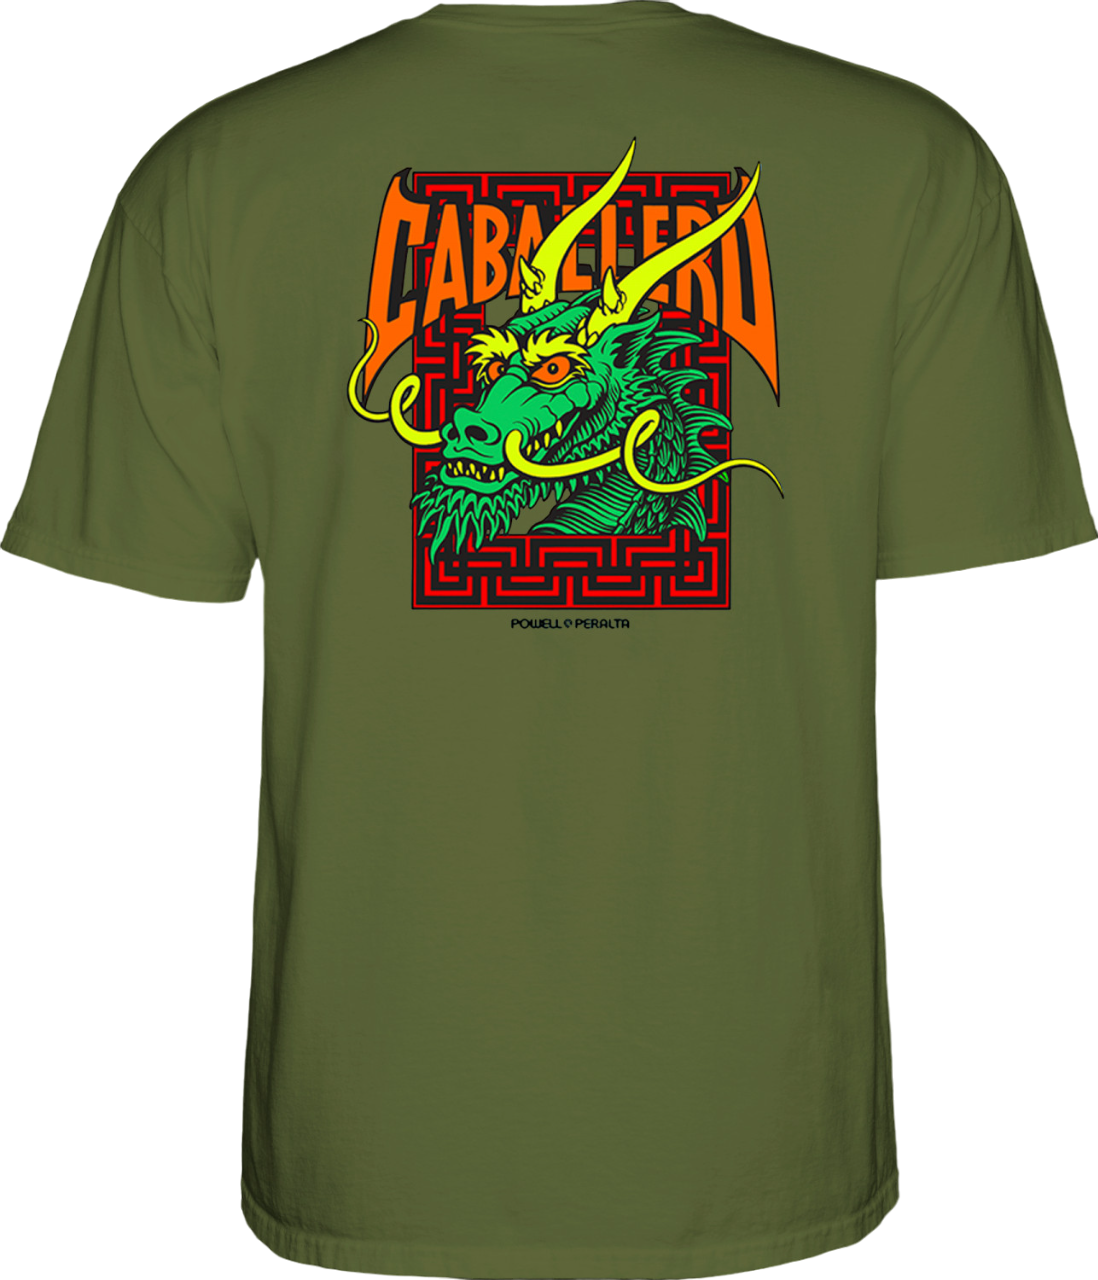 Powell Peralta Cab Street Dragon T Shirt - Military Green